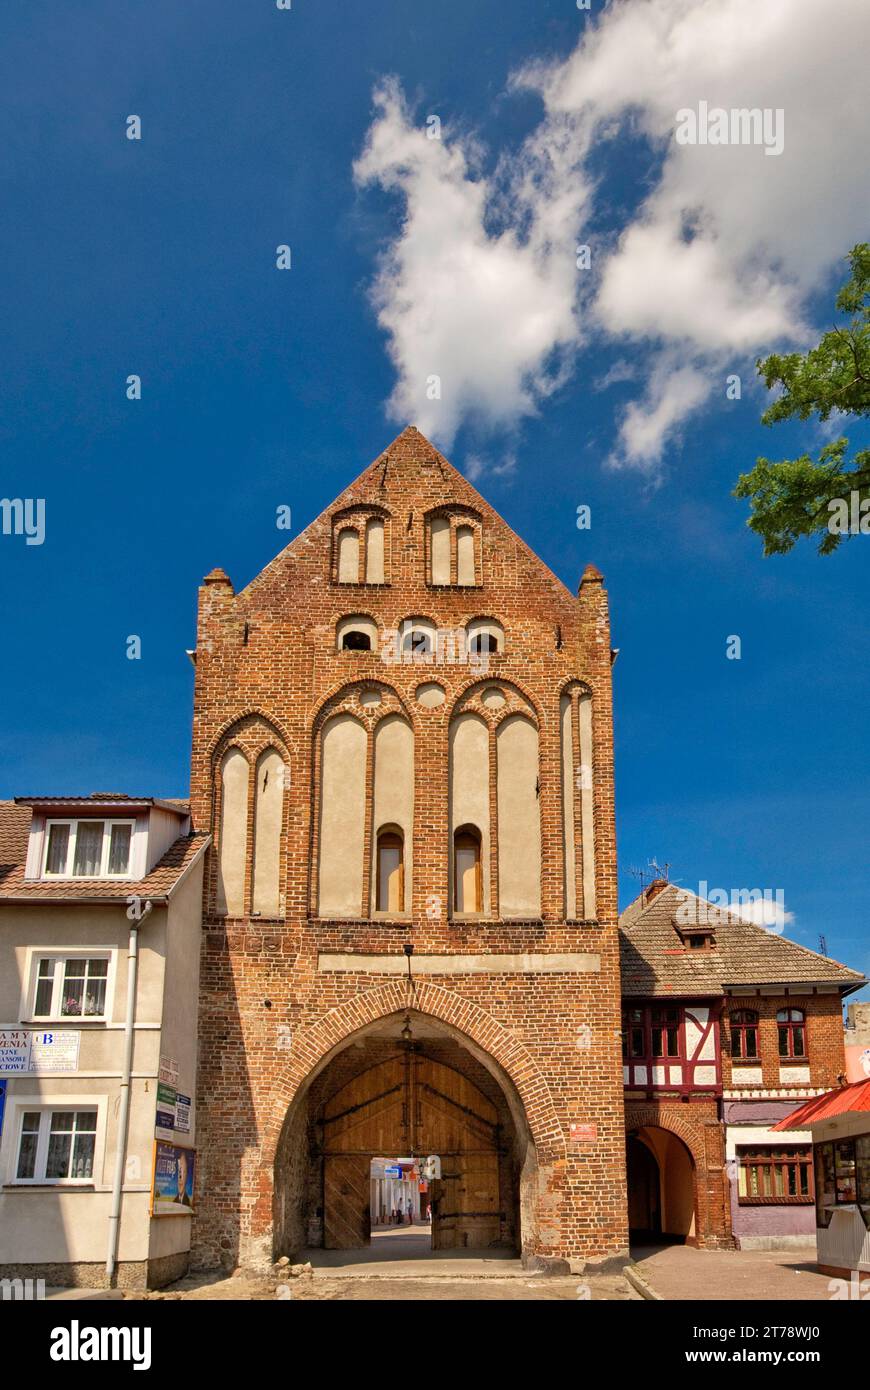 Brama Kamienna medievale (porta di pietra) a Świdwin in Pomerania, Voivodato della Pomerania occidentale (Zachodniopomorskie), Polonia Foto Stock